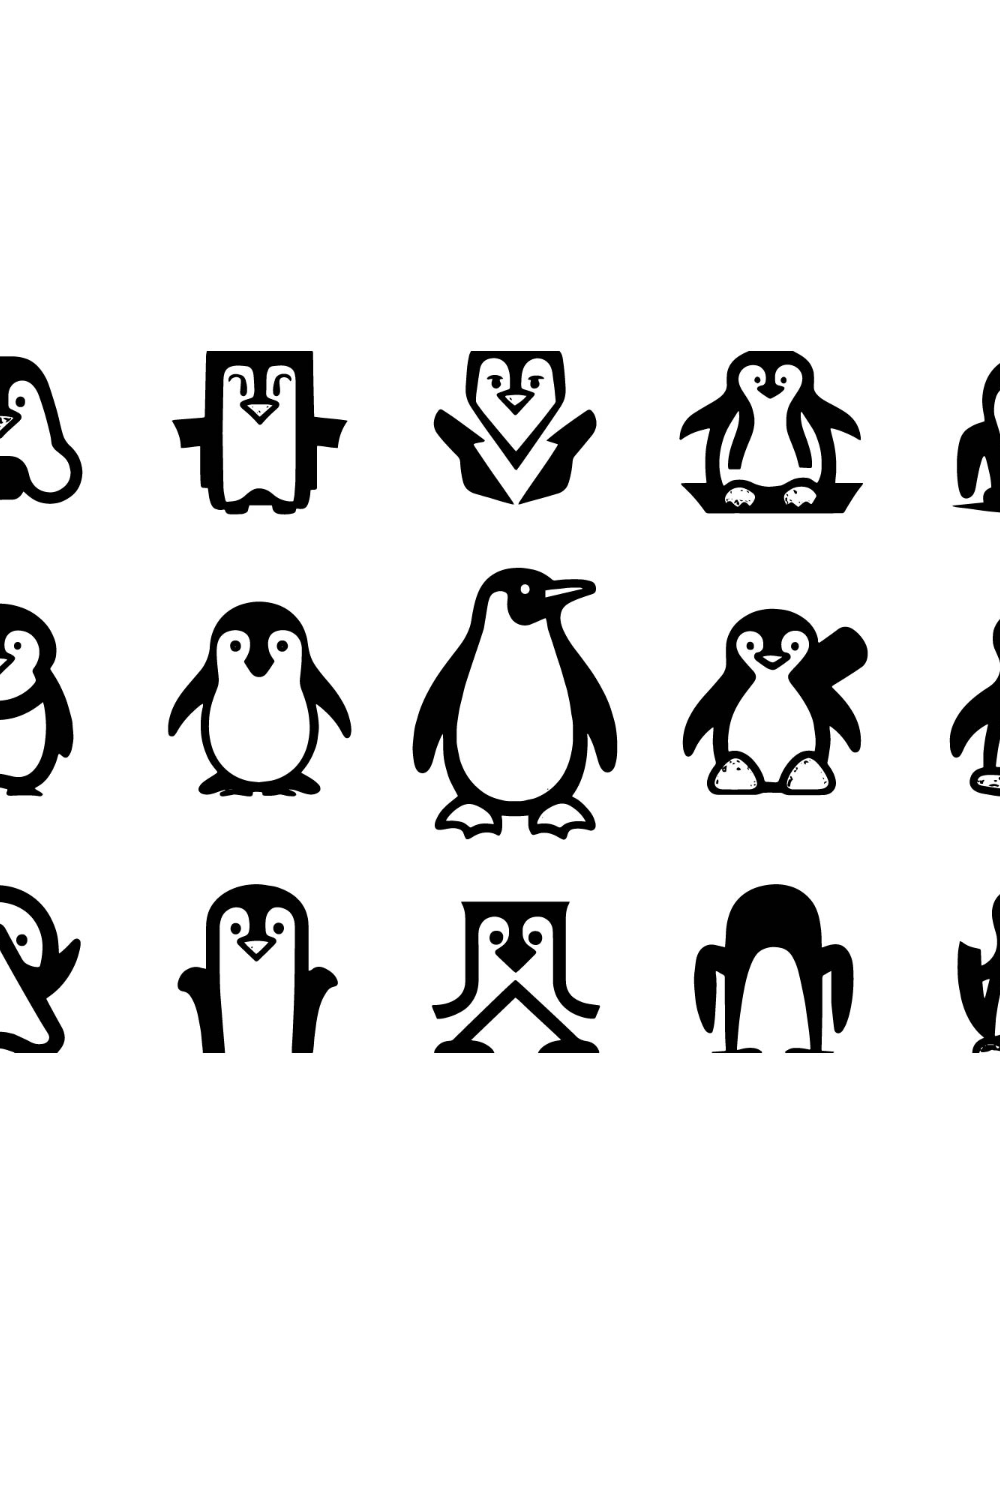 Bundle of Penguin Icons pinterest preview image.